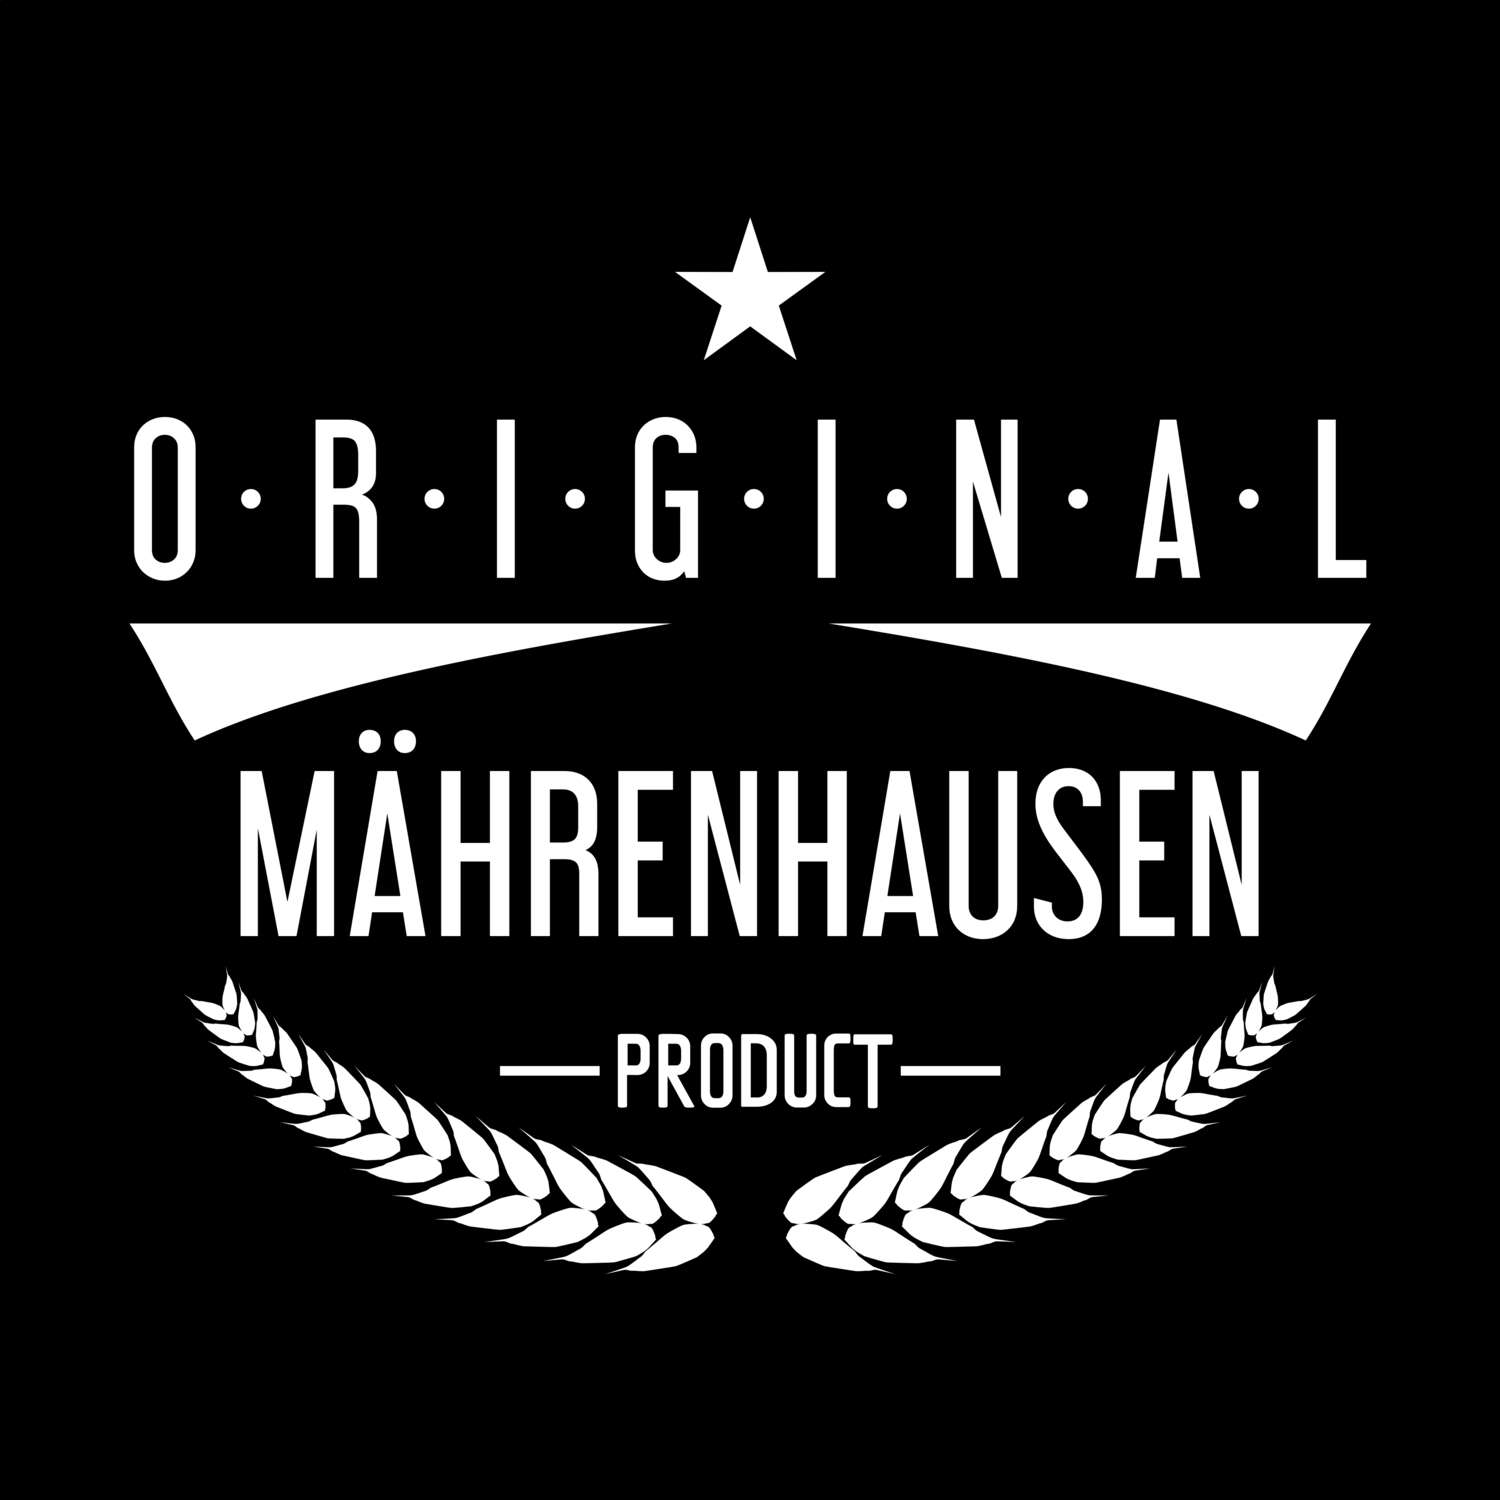 Mährenhausen T-Shirt »Original Product«